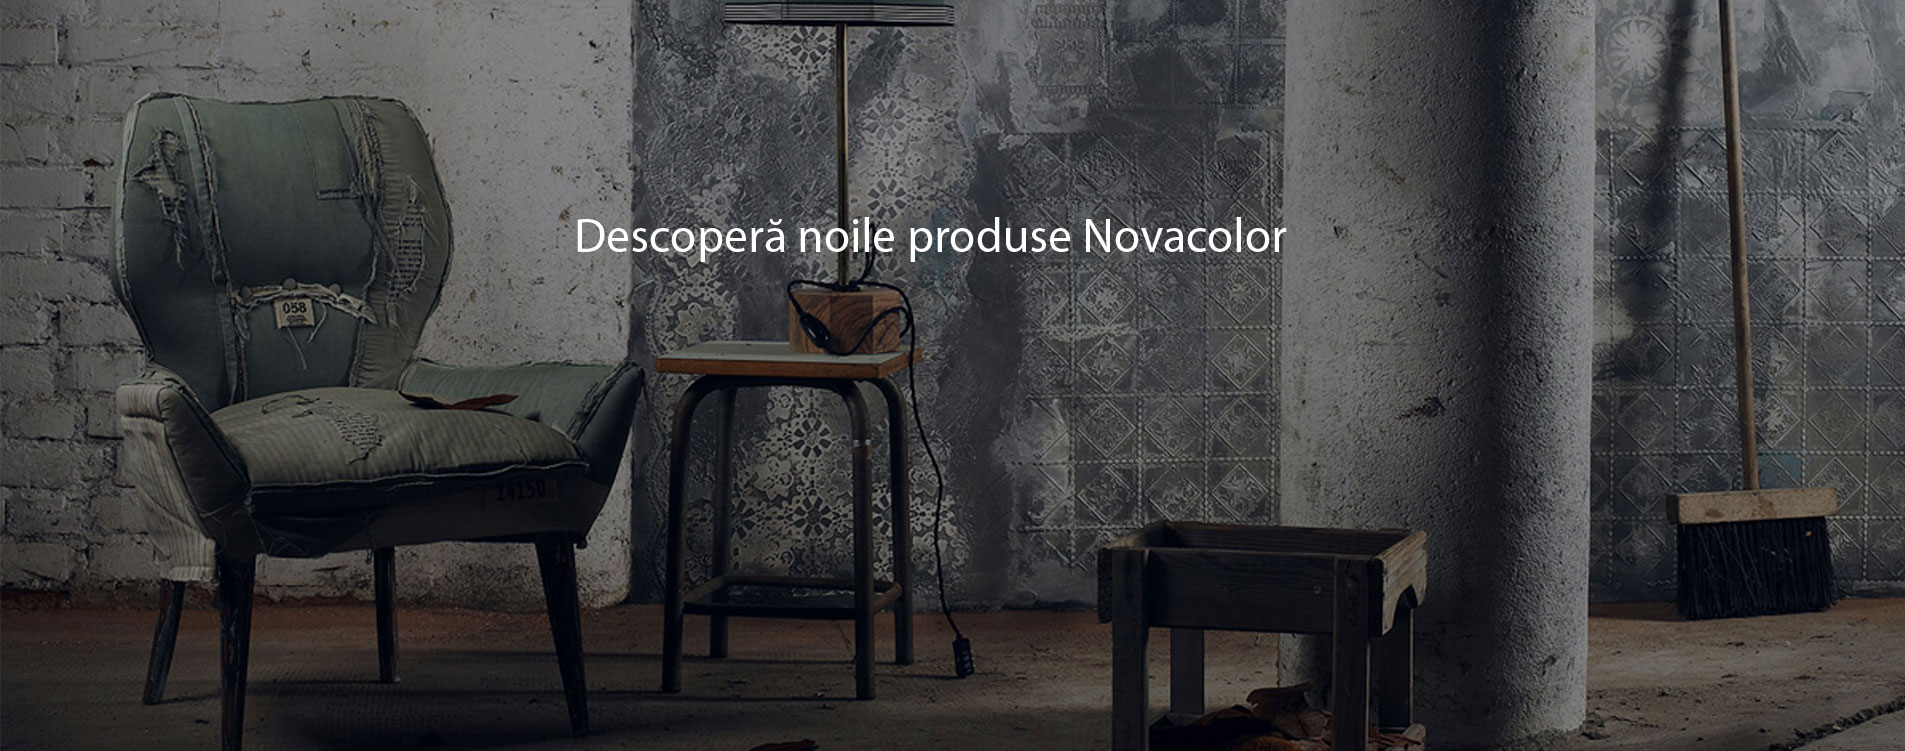 Descopera noile produse Novacolor